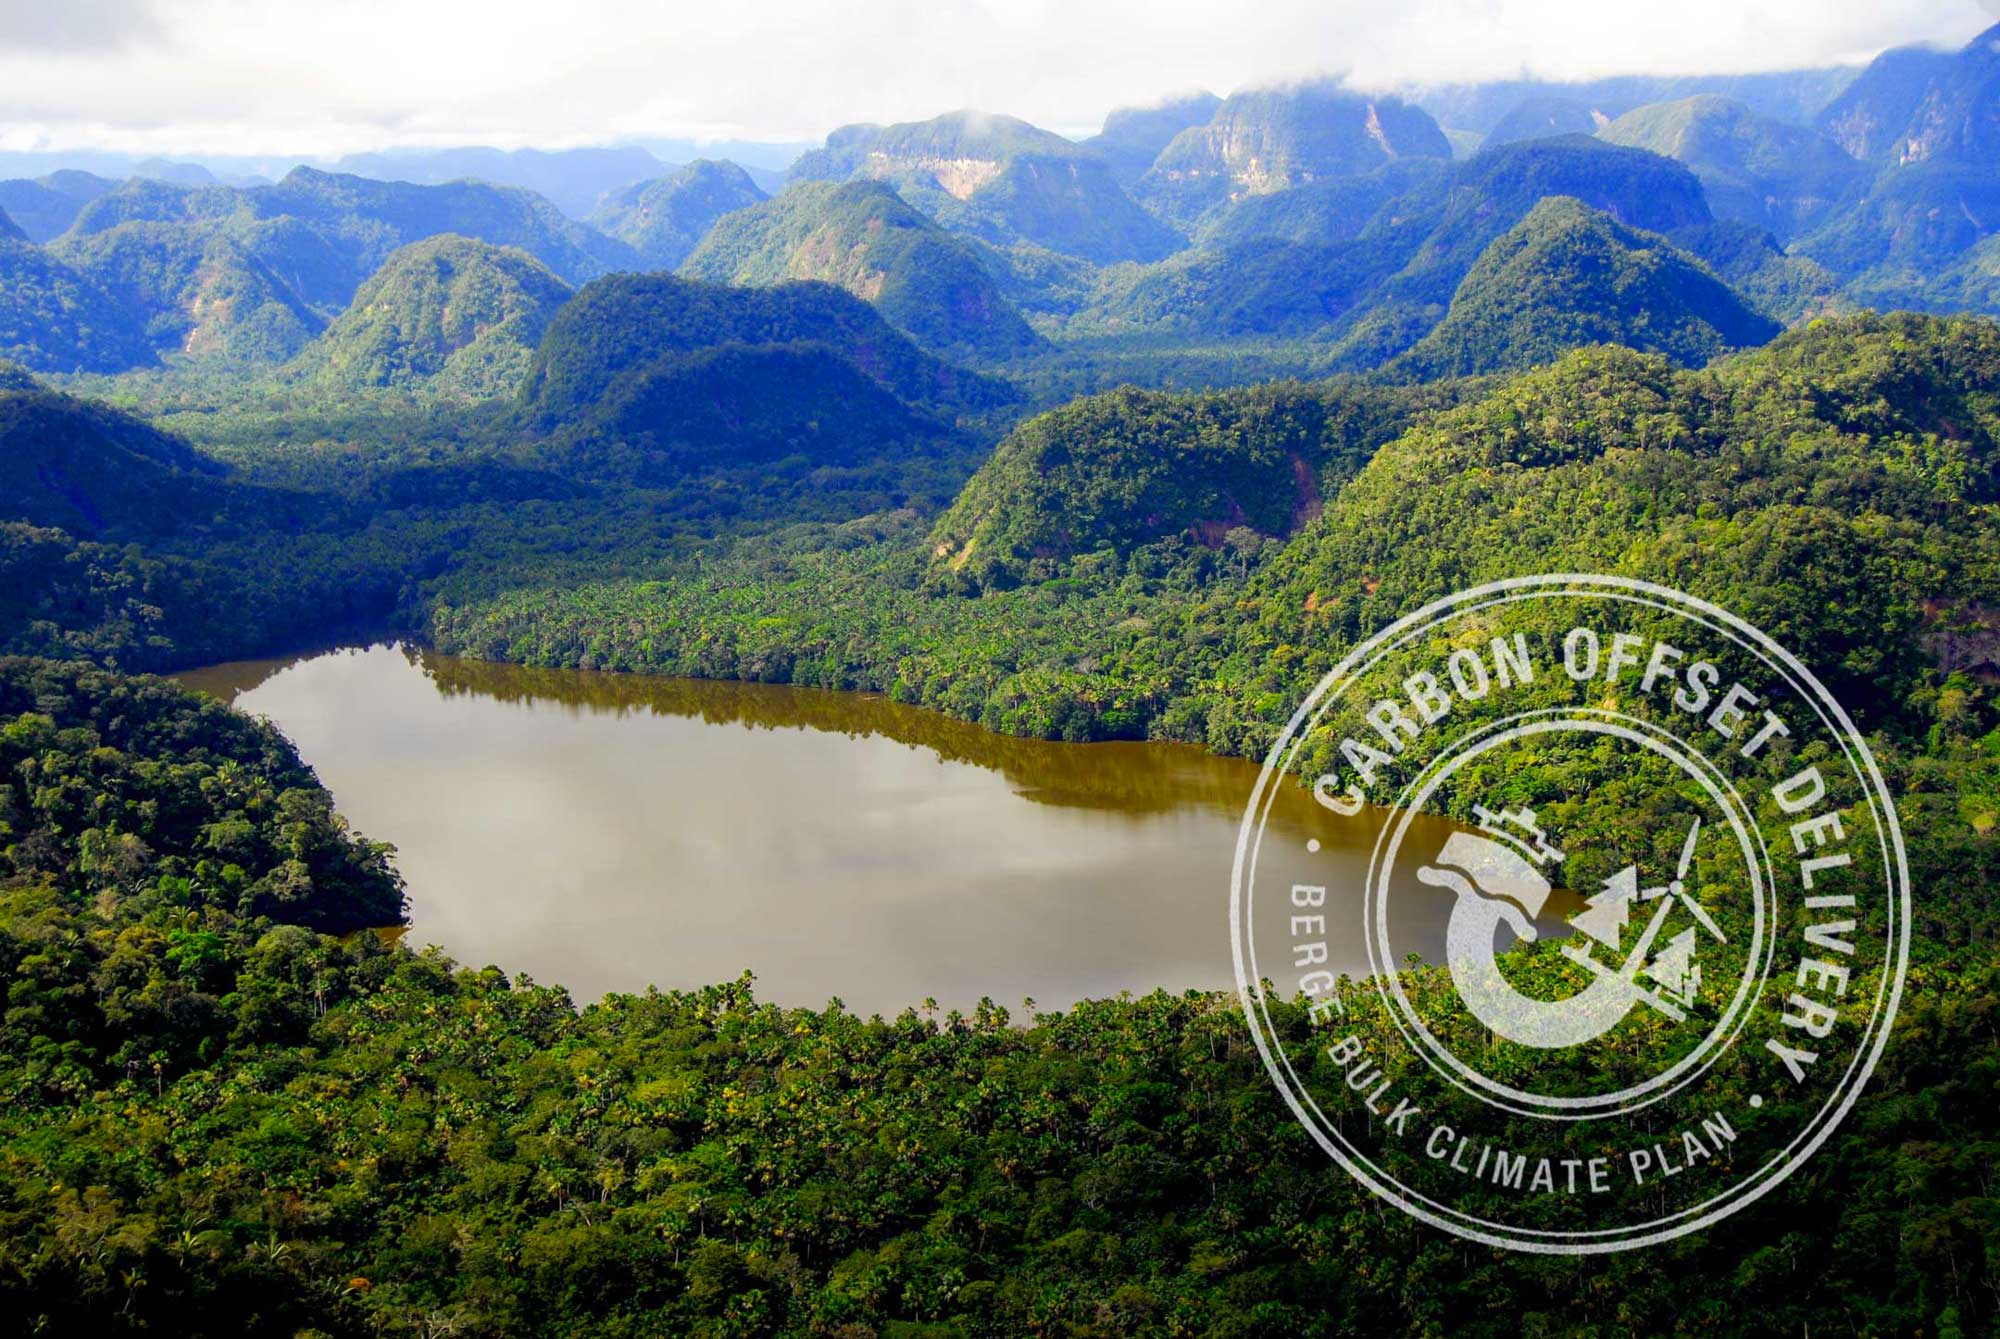 Cordillera Azul REDD+ Project, a forest protection project in Peru